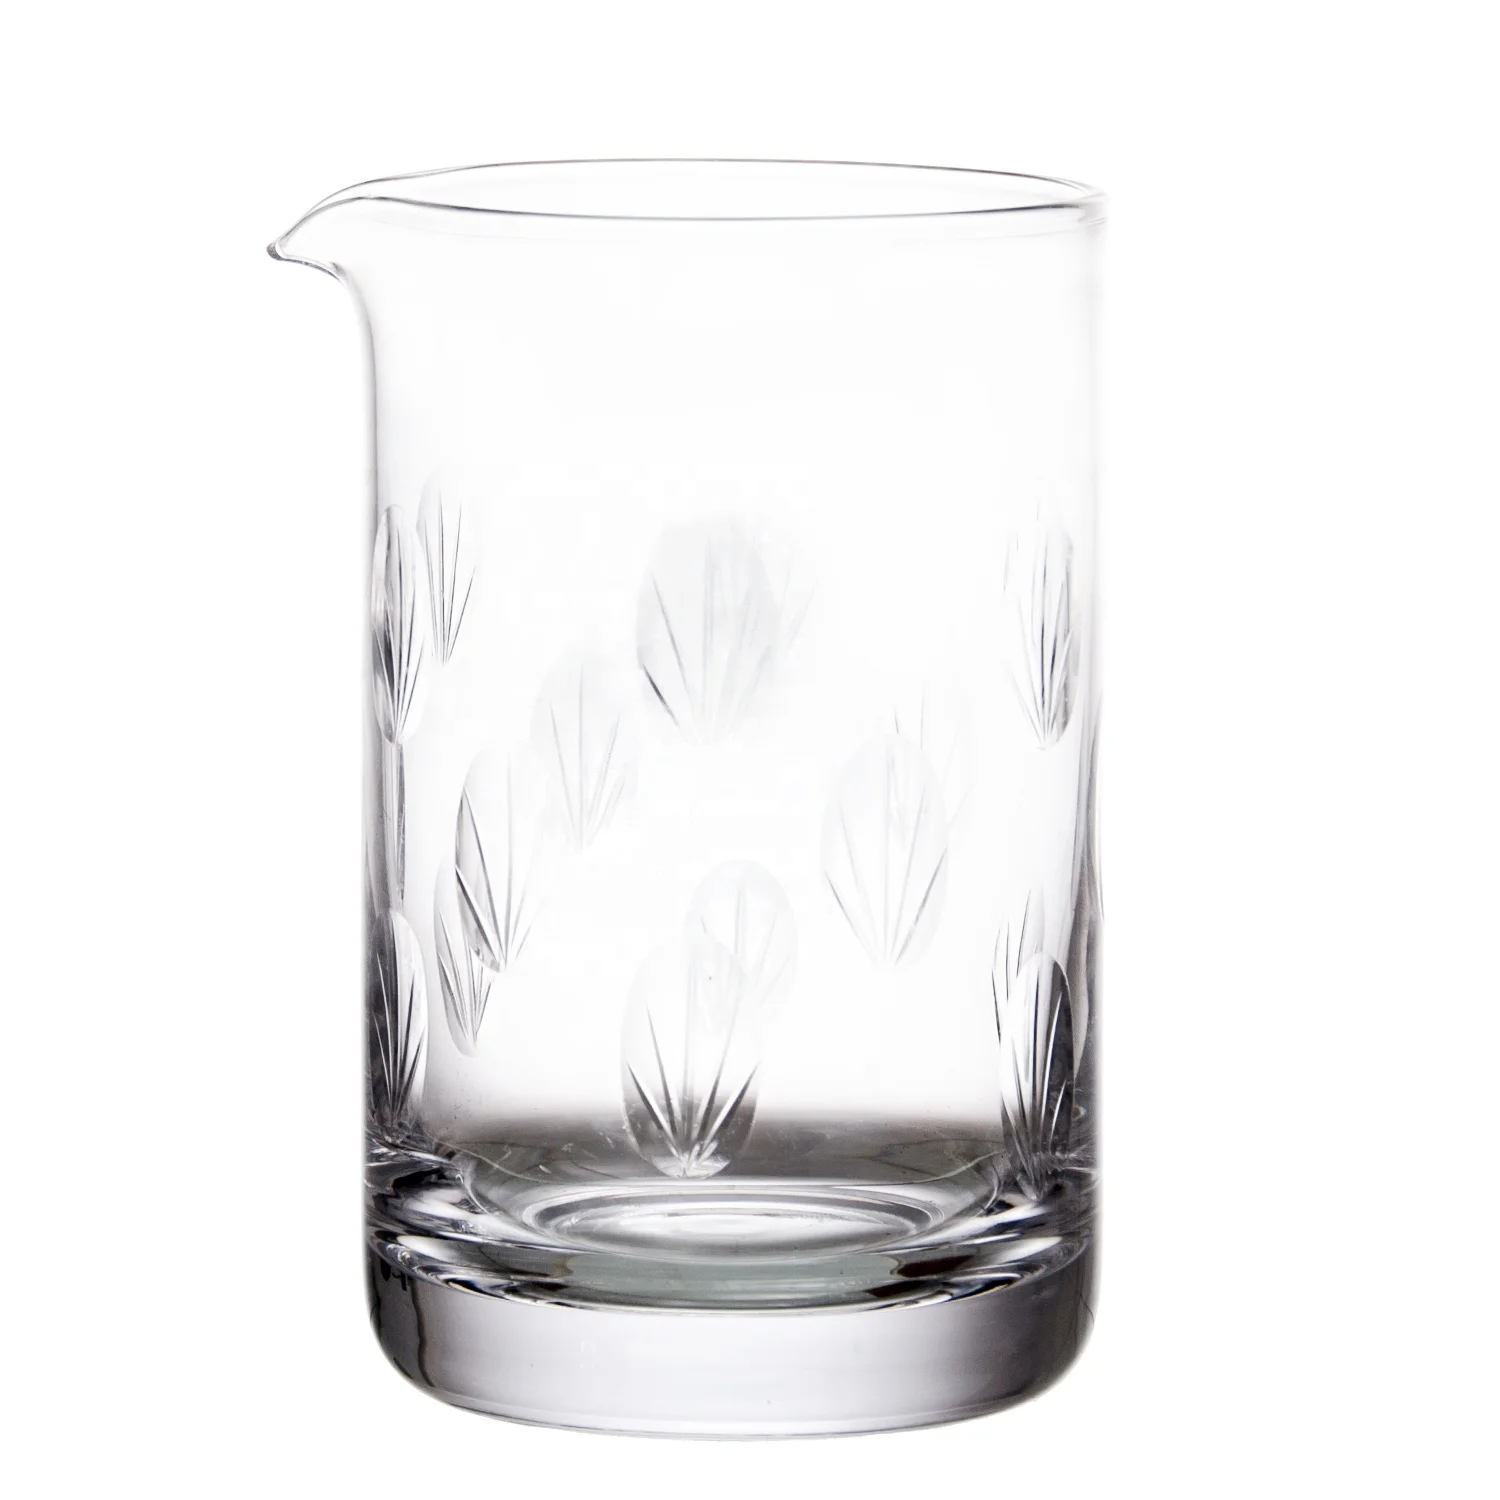 
Bar Tools Handmade High Quality 500 ml Engraving Bar Glassware Crystal Cocktail Mixing Glass 